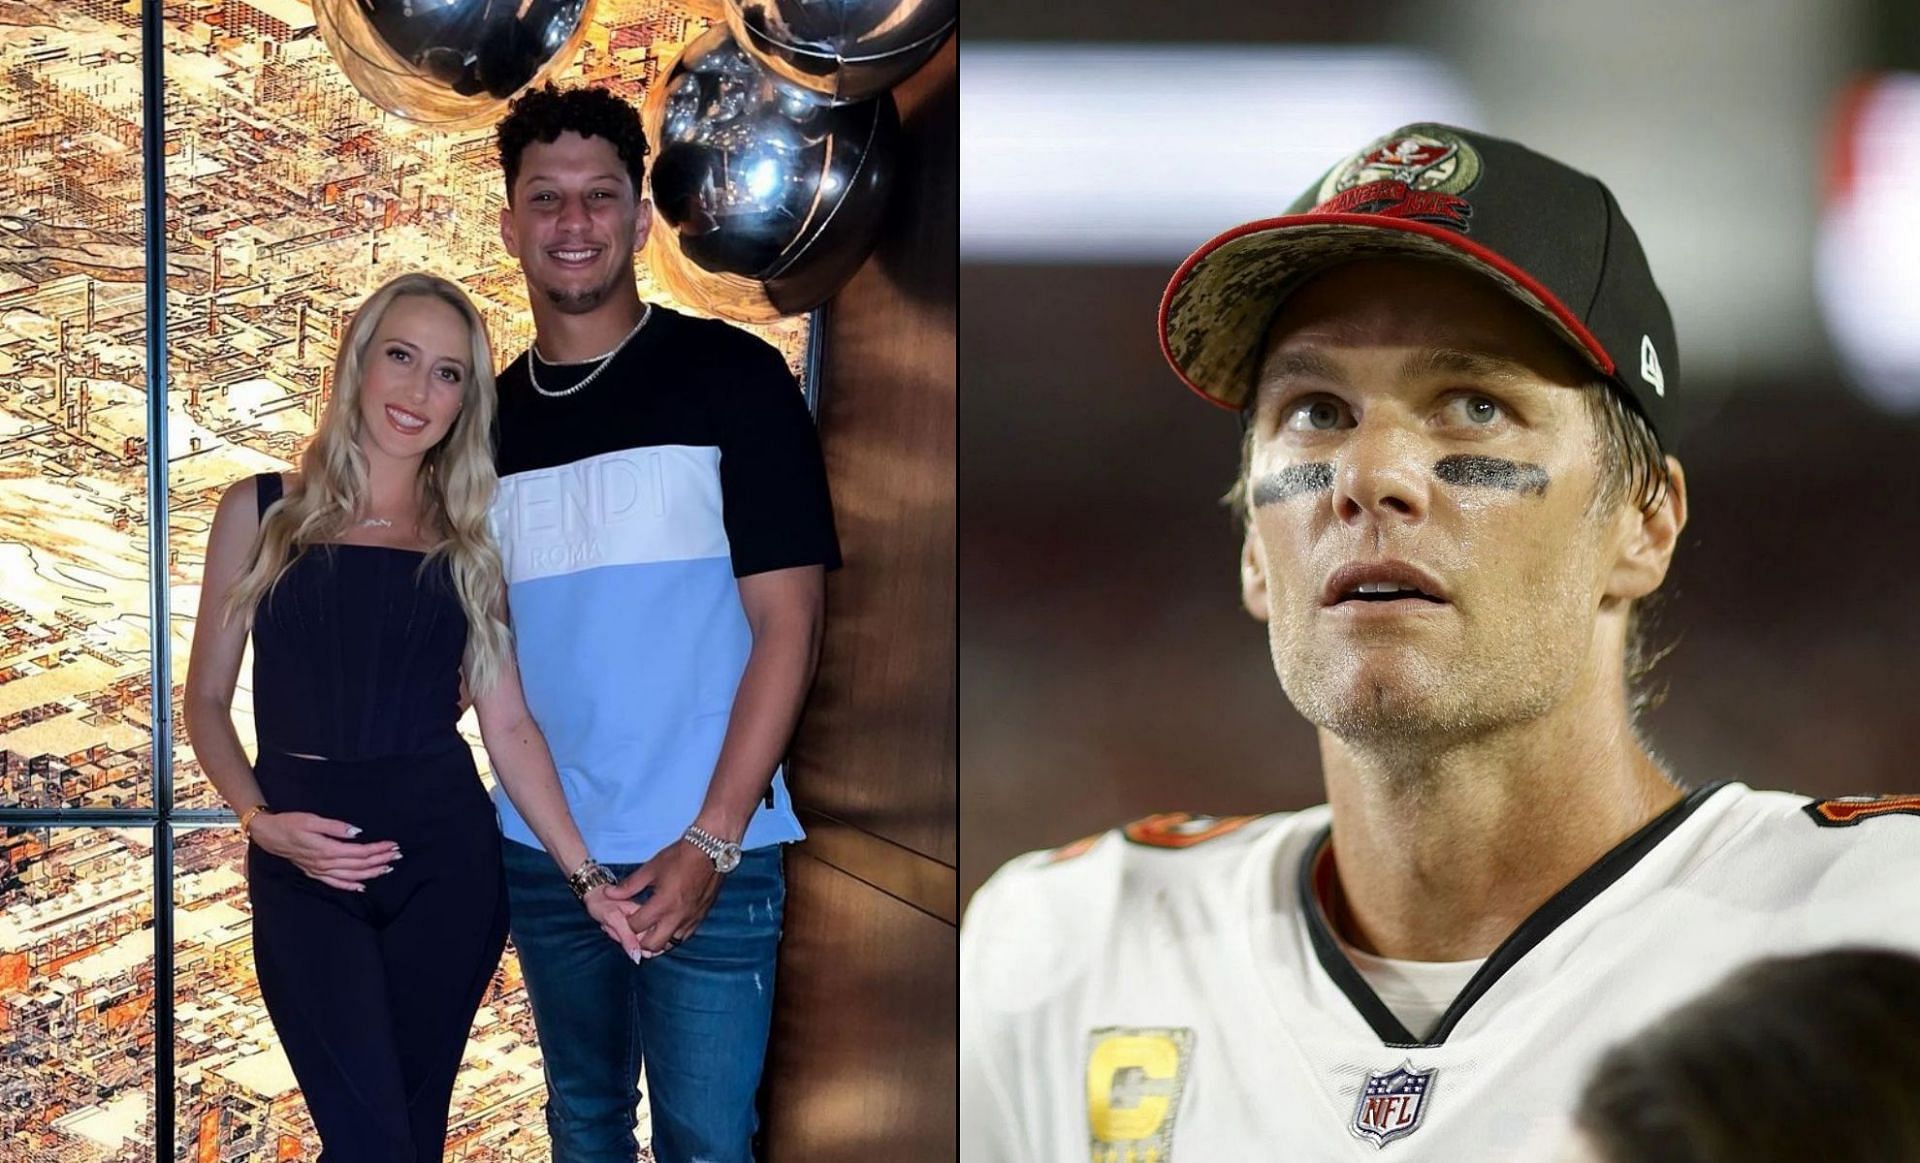 Is Brittany Mahomes a Tom Brady fan?